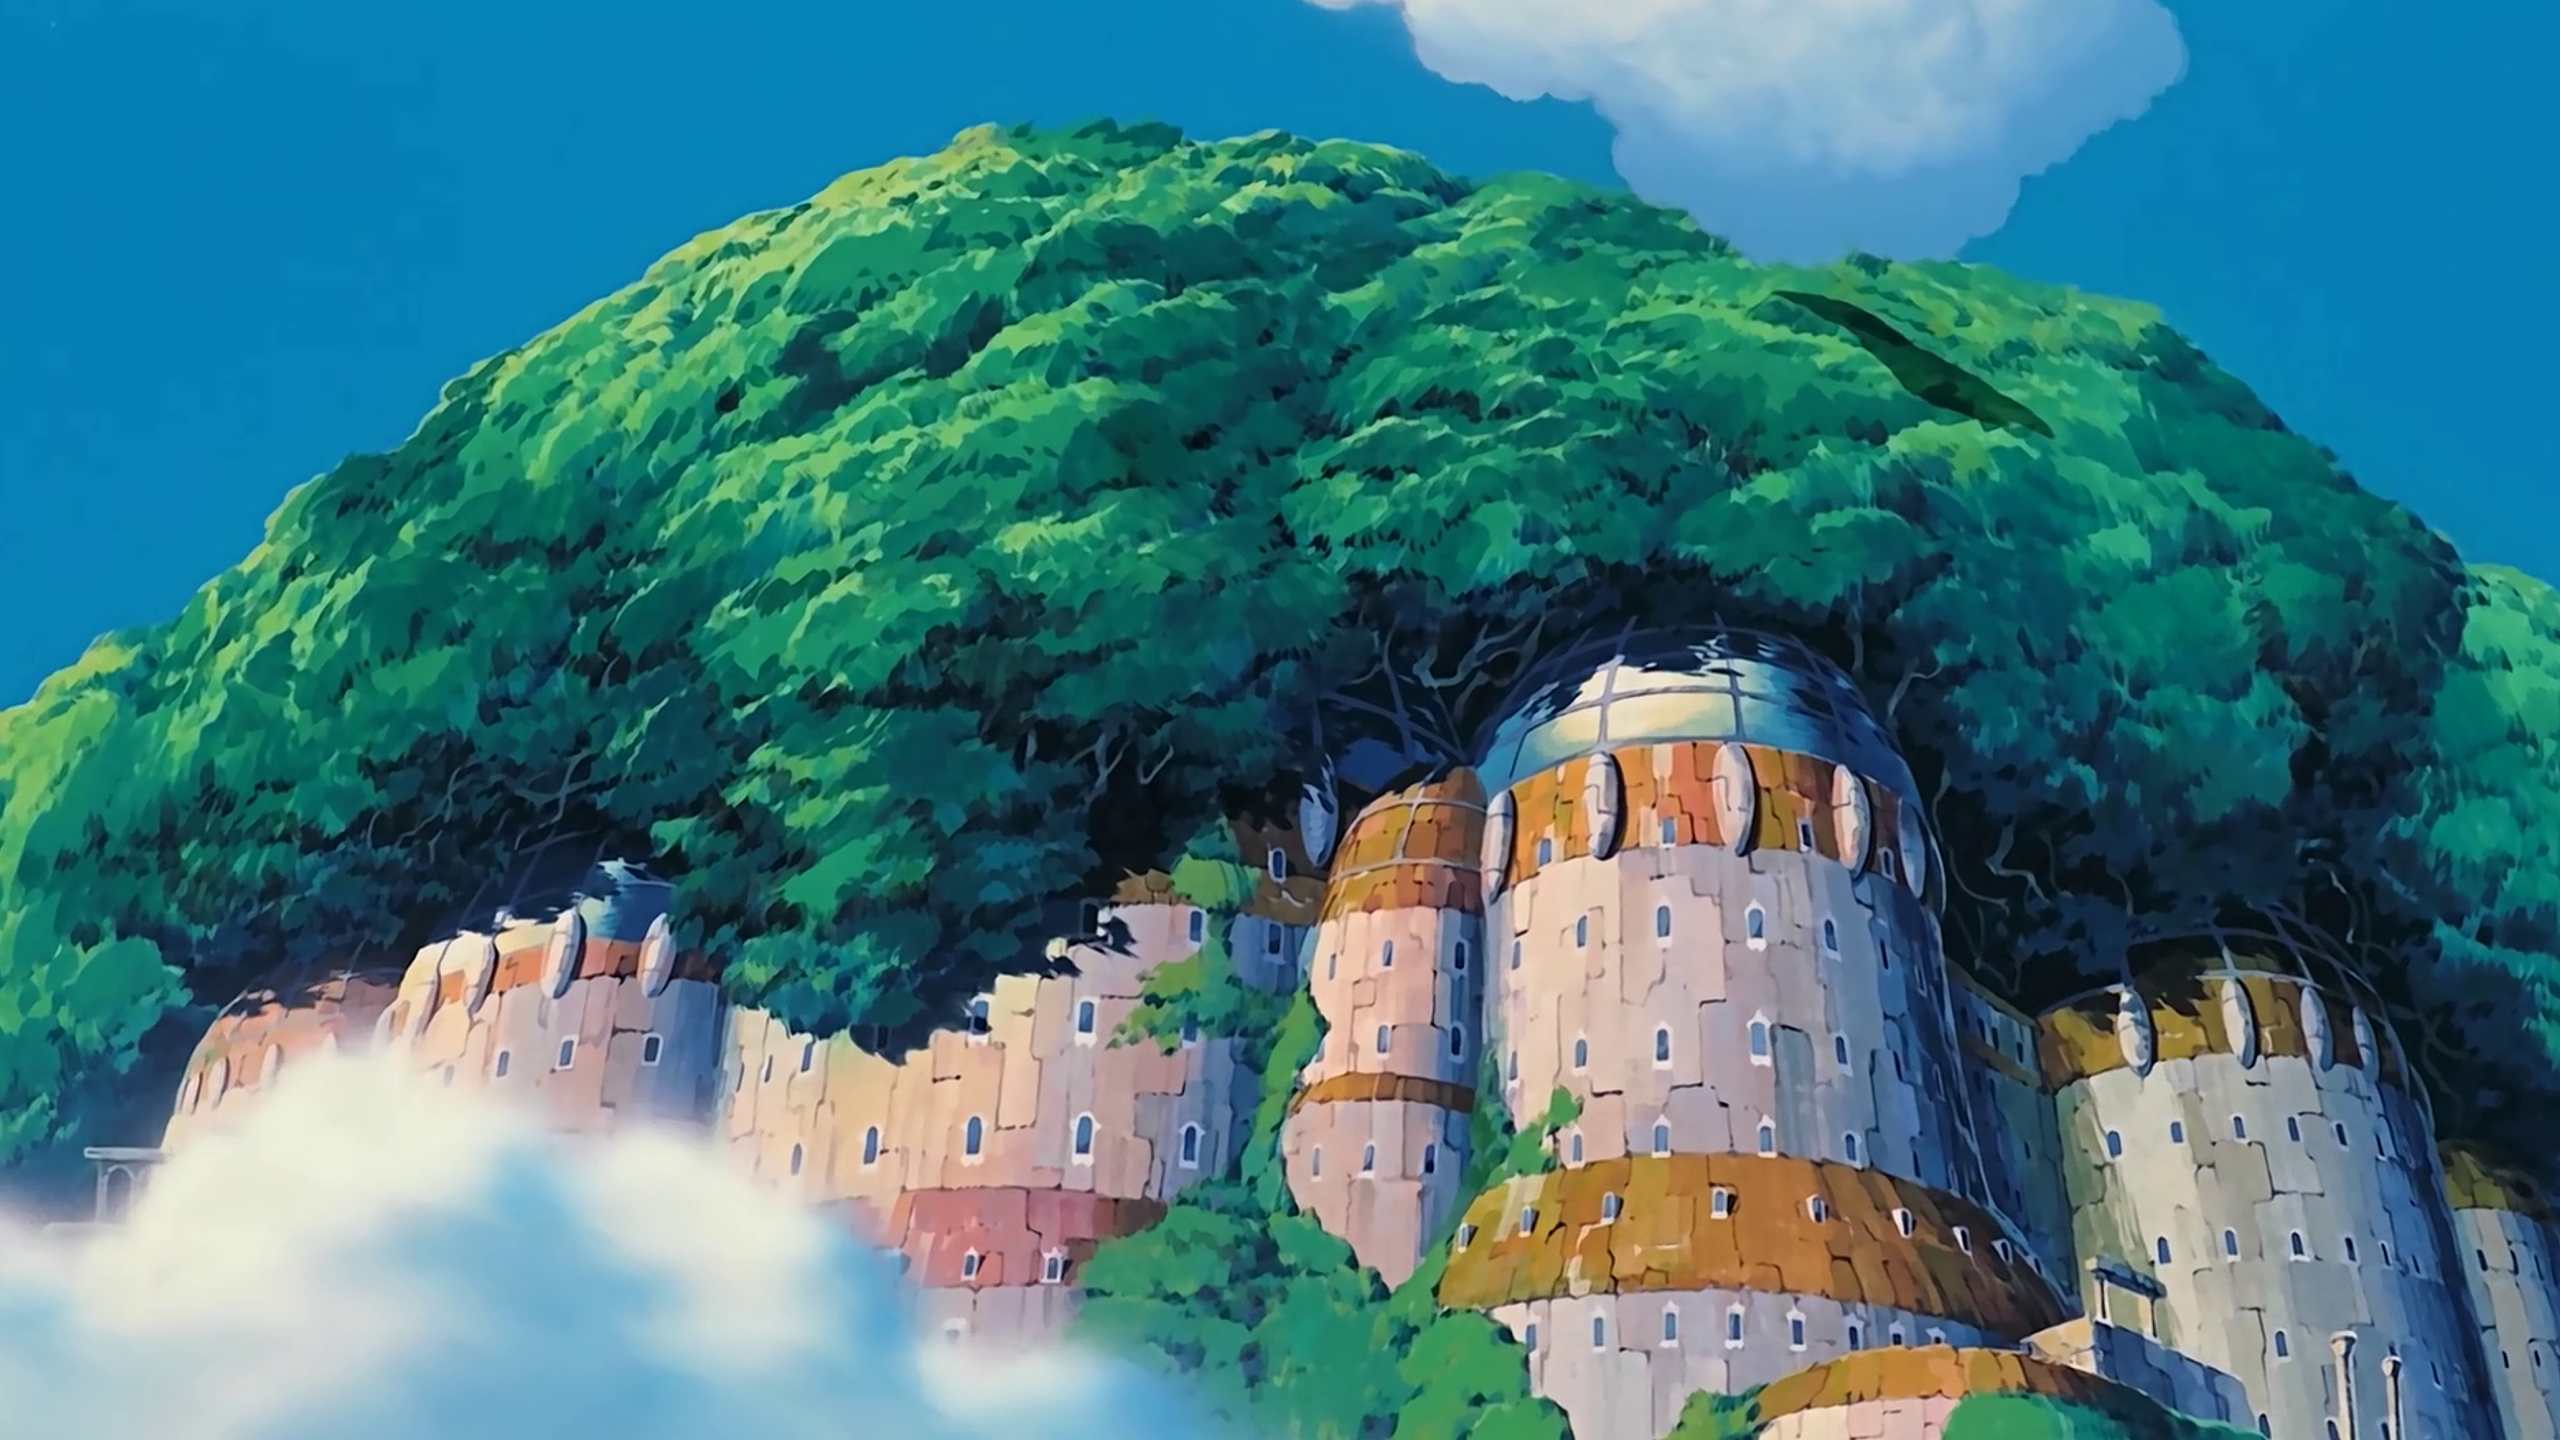 Miyazaki  Ghibli Tribute repetitive wallpaper by Qinni on DeviantArt